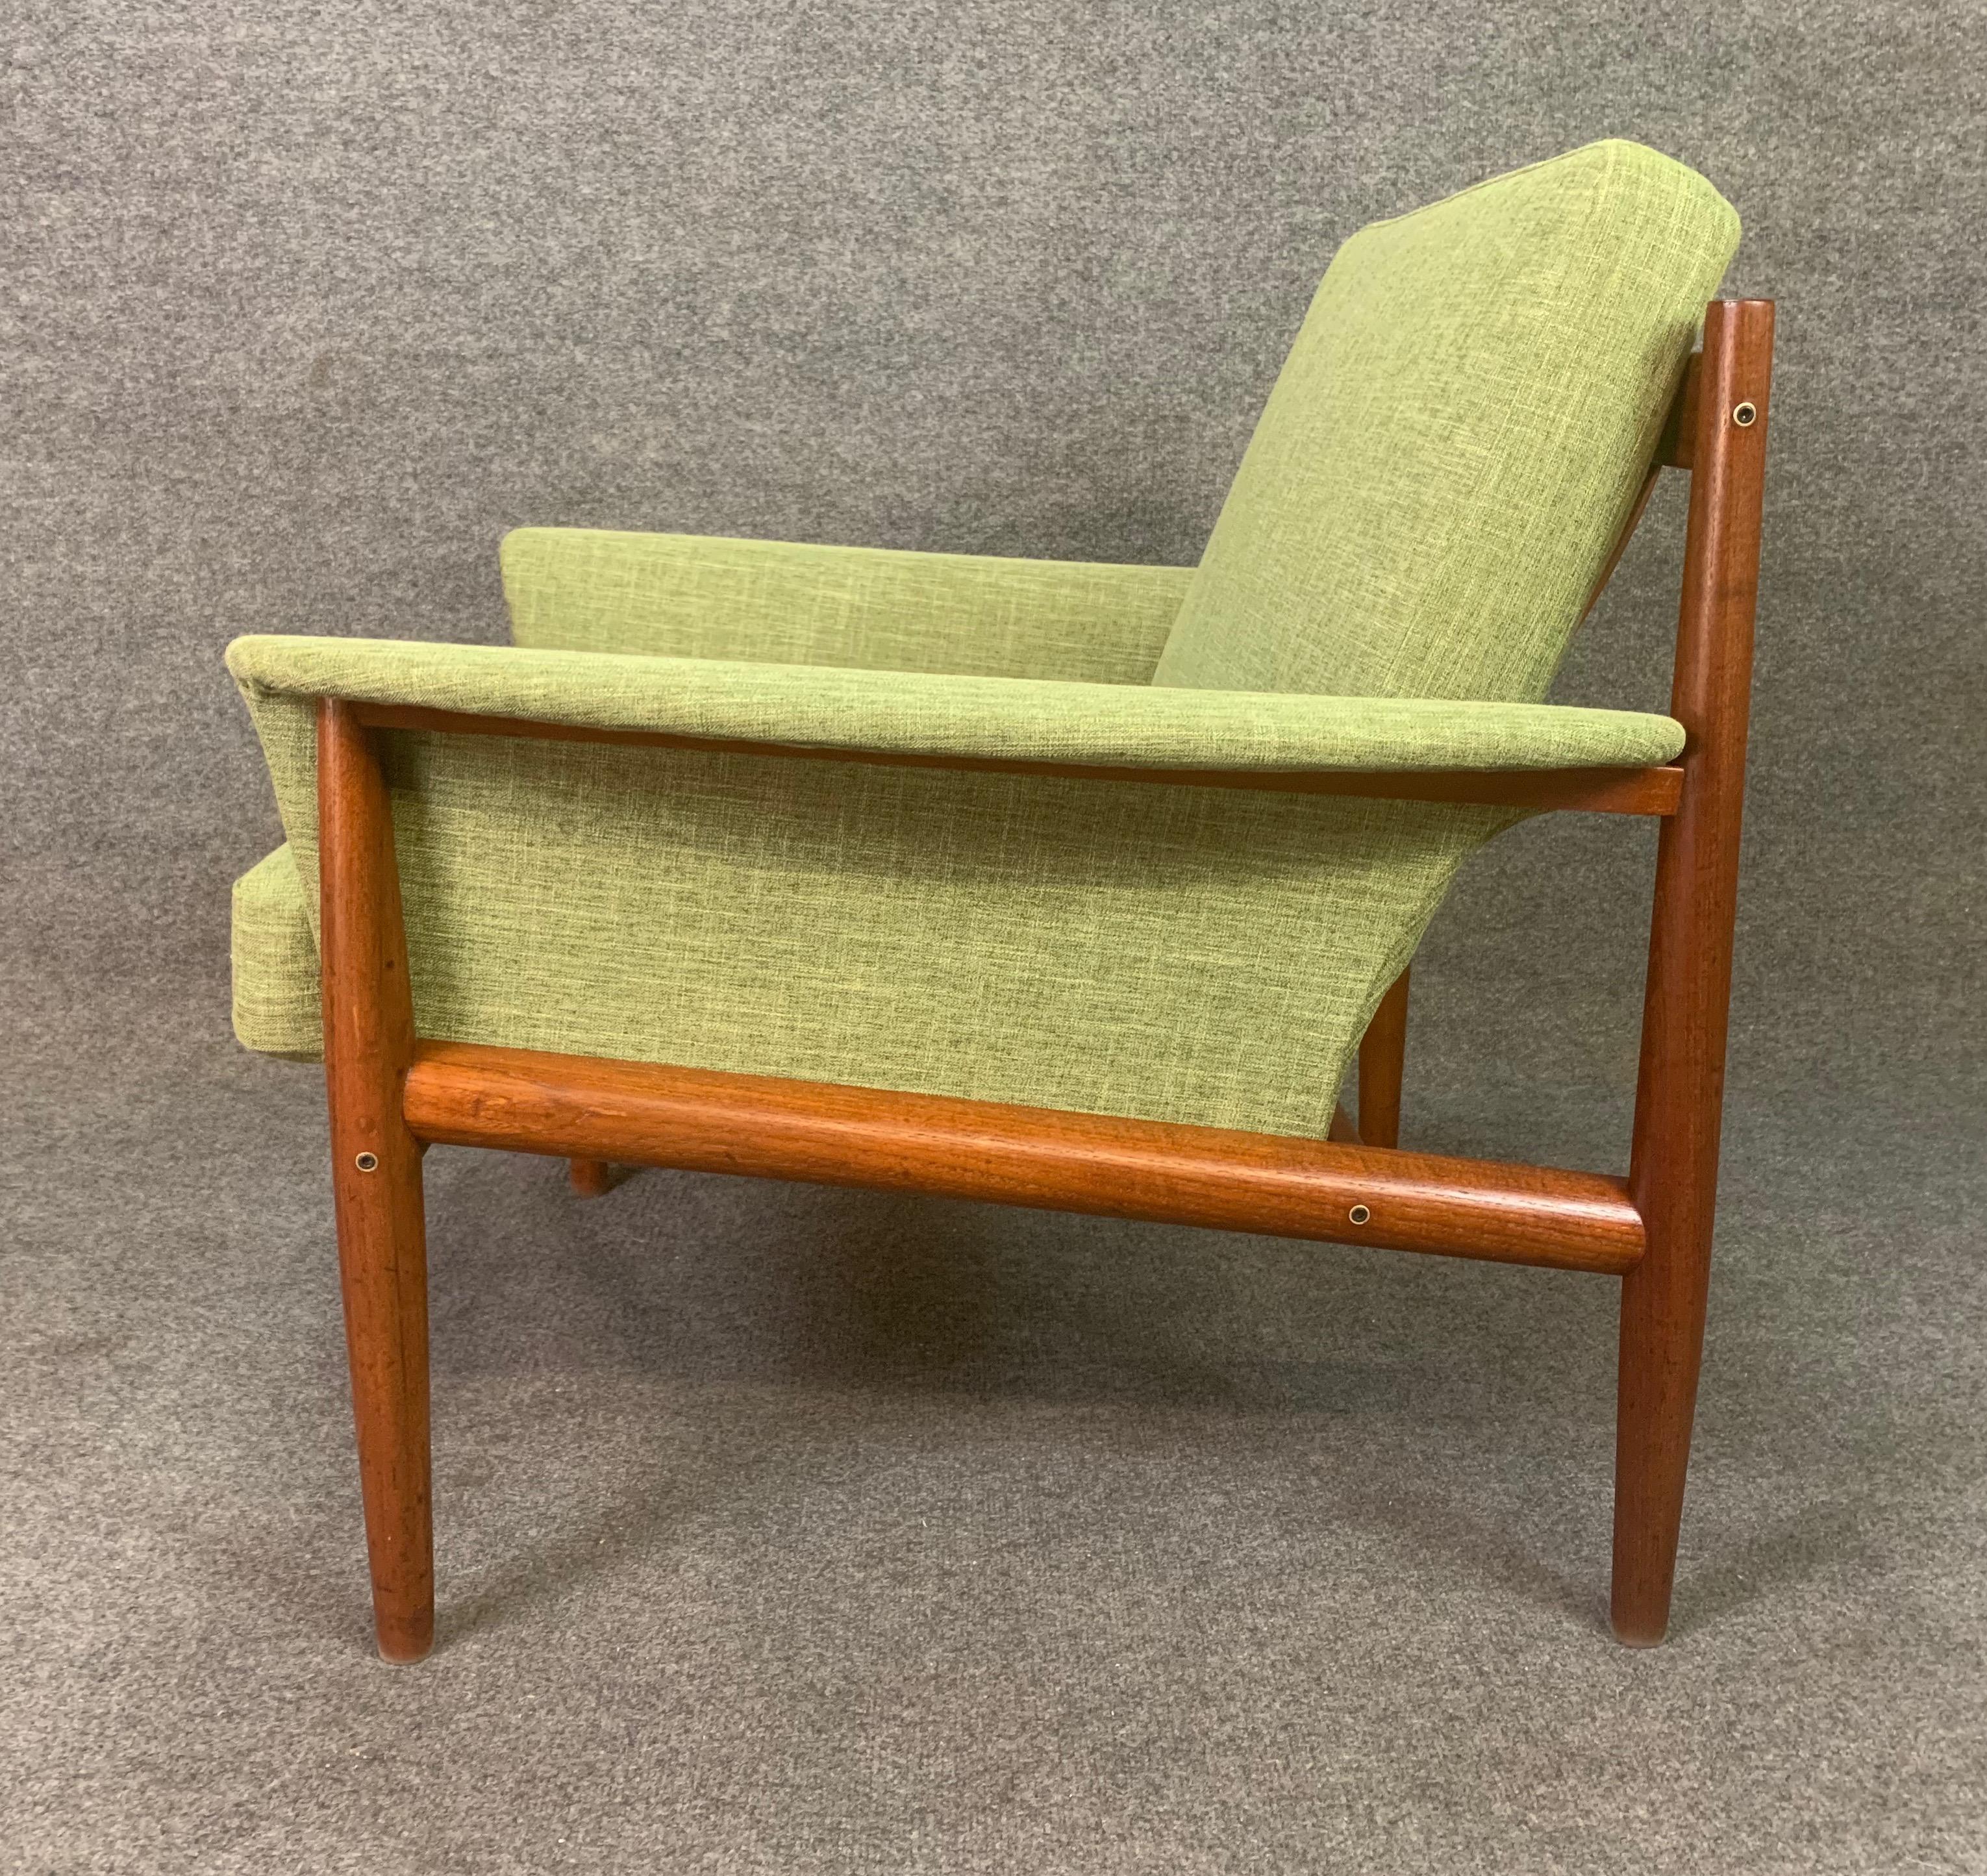 Woodwork Vintage Danish Mid-Century Modern Teak Lounge Chair and Ottoman by Grete Jalk